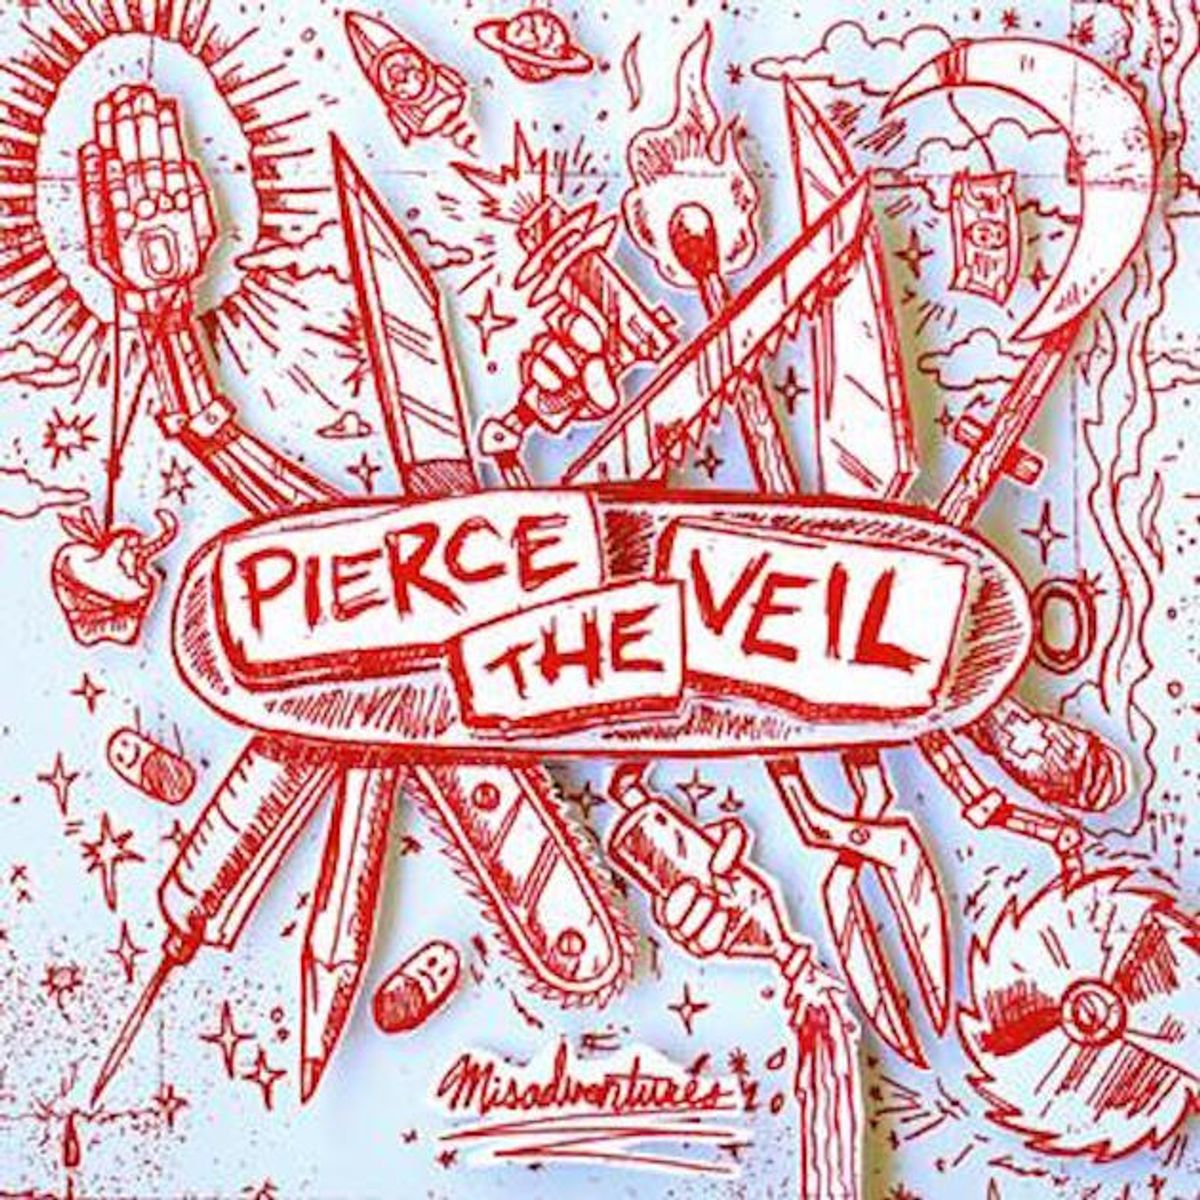 8 Of Pierce The Veil's Greatest Deep Cuts